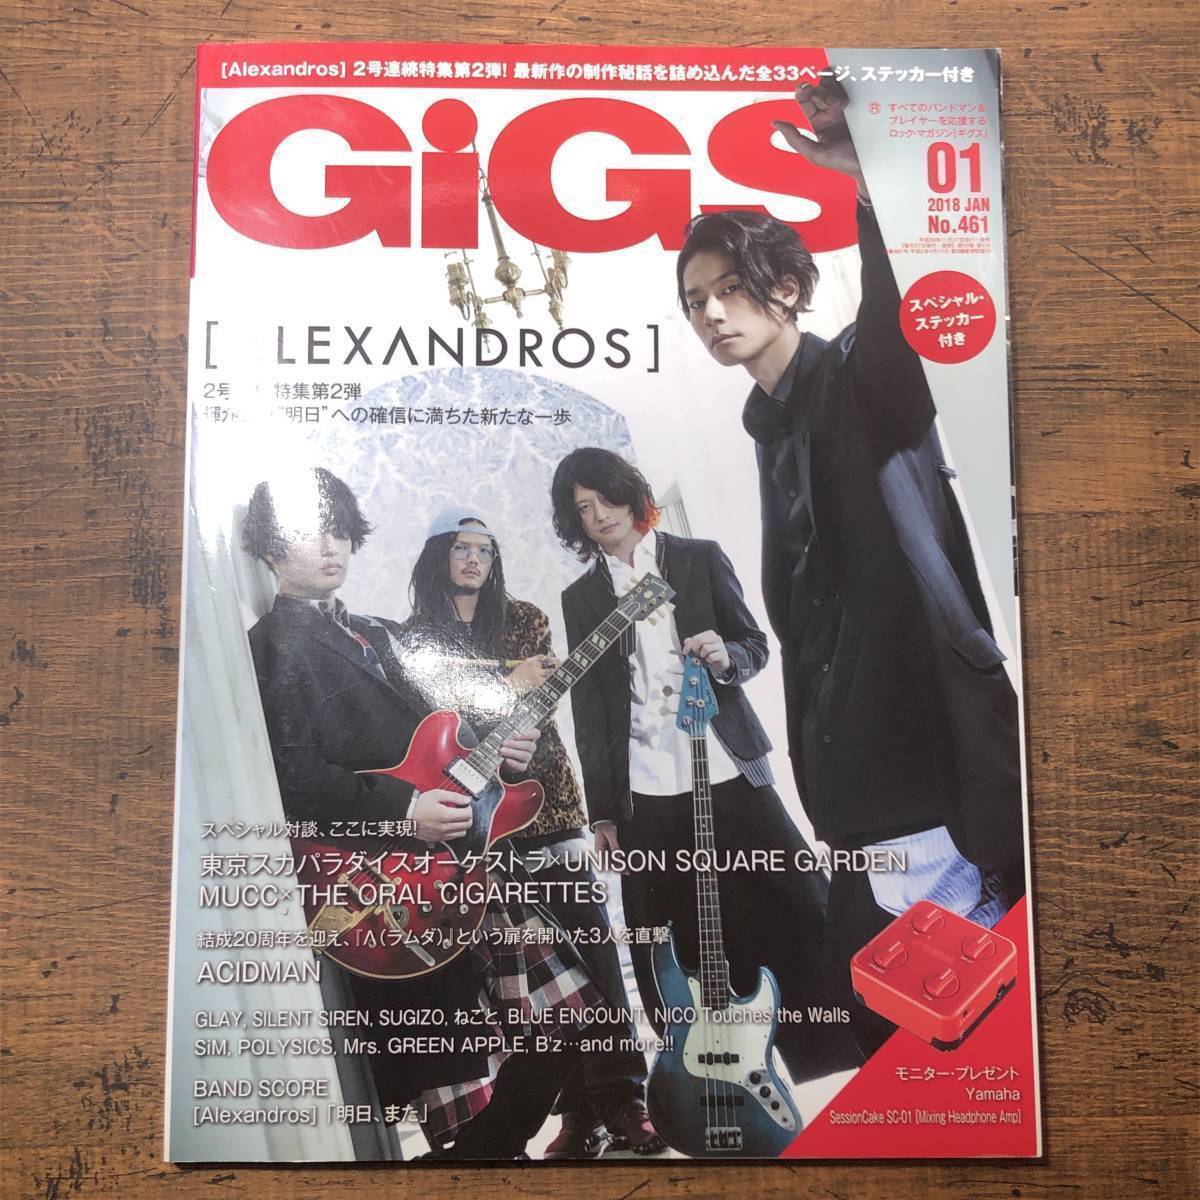 Q-315●月刊GiGS ギグス●2018年 1月号 No.461■ALEXANDROS/東京スカパラダイスオーケストラ×ユニゾンスクエアガーデン/B’ｚ■